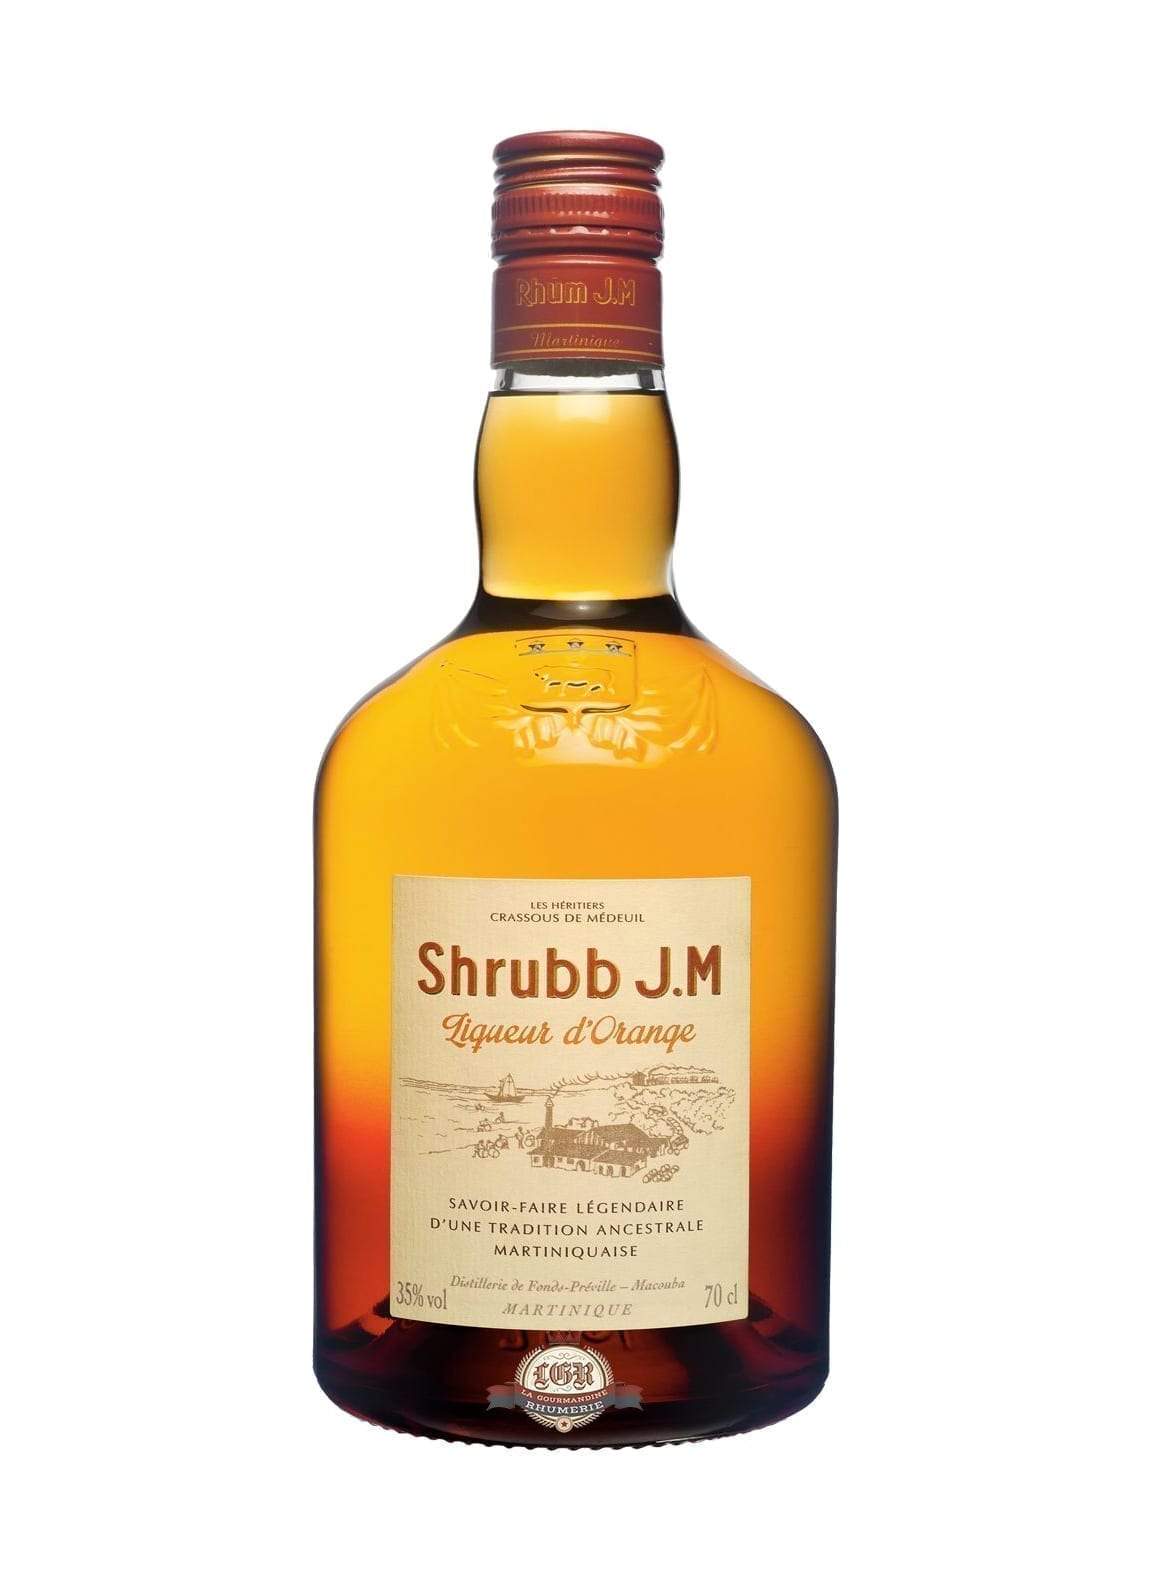 J.M Rhum Shrubb Liqueur 35% 700ml | Rum | Shop online at Spirits of France